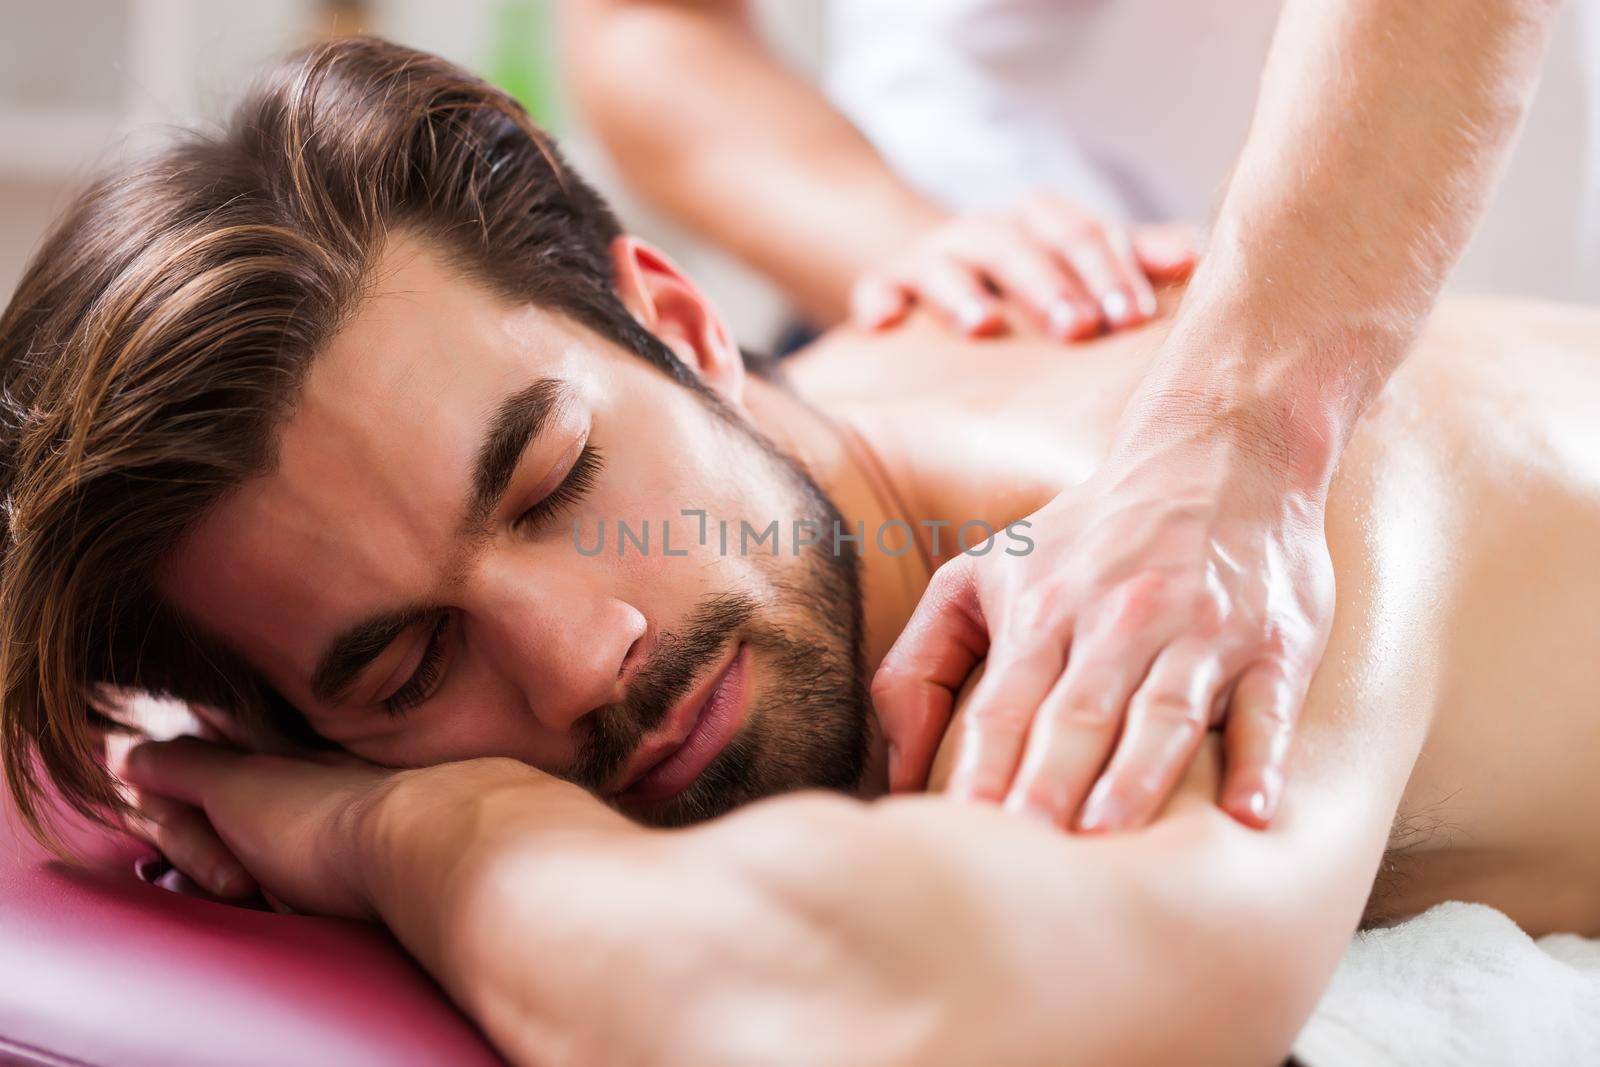 Young man is enjoying massage on spa treatment. Professional masseur massaging back of man.